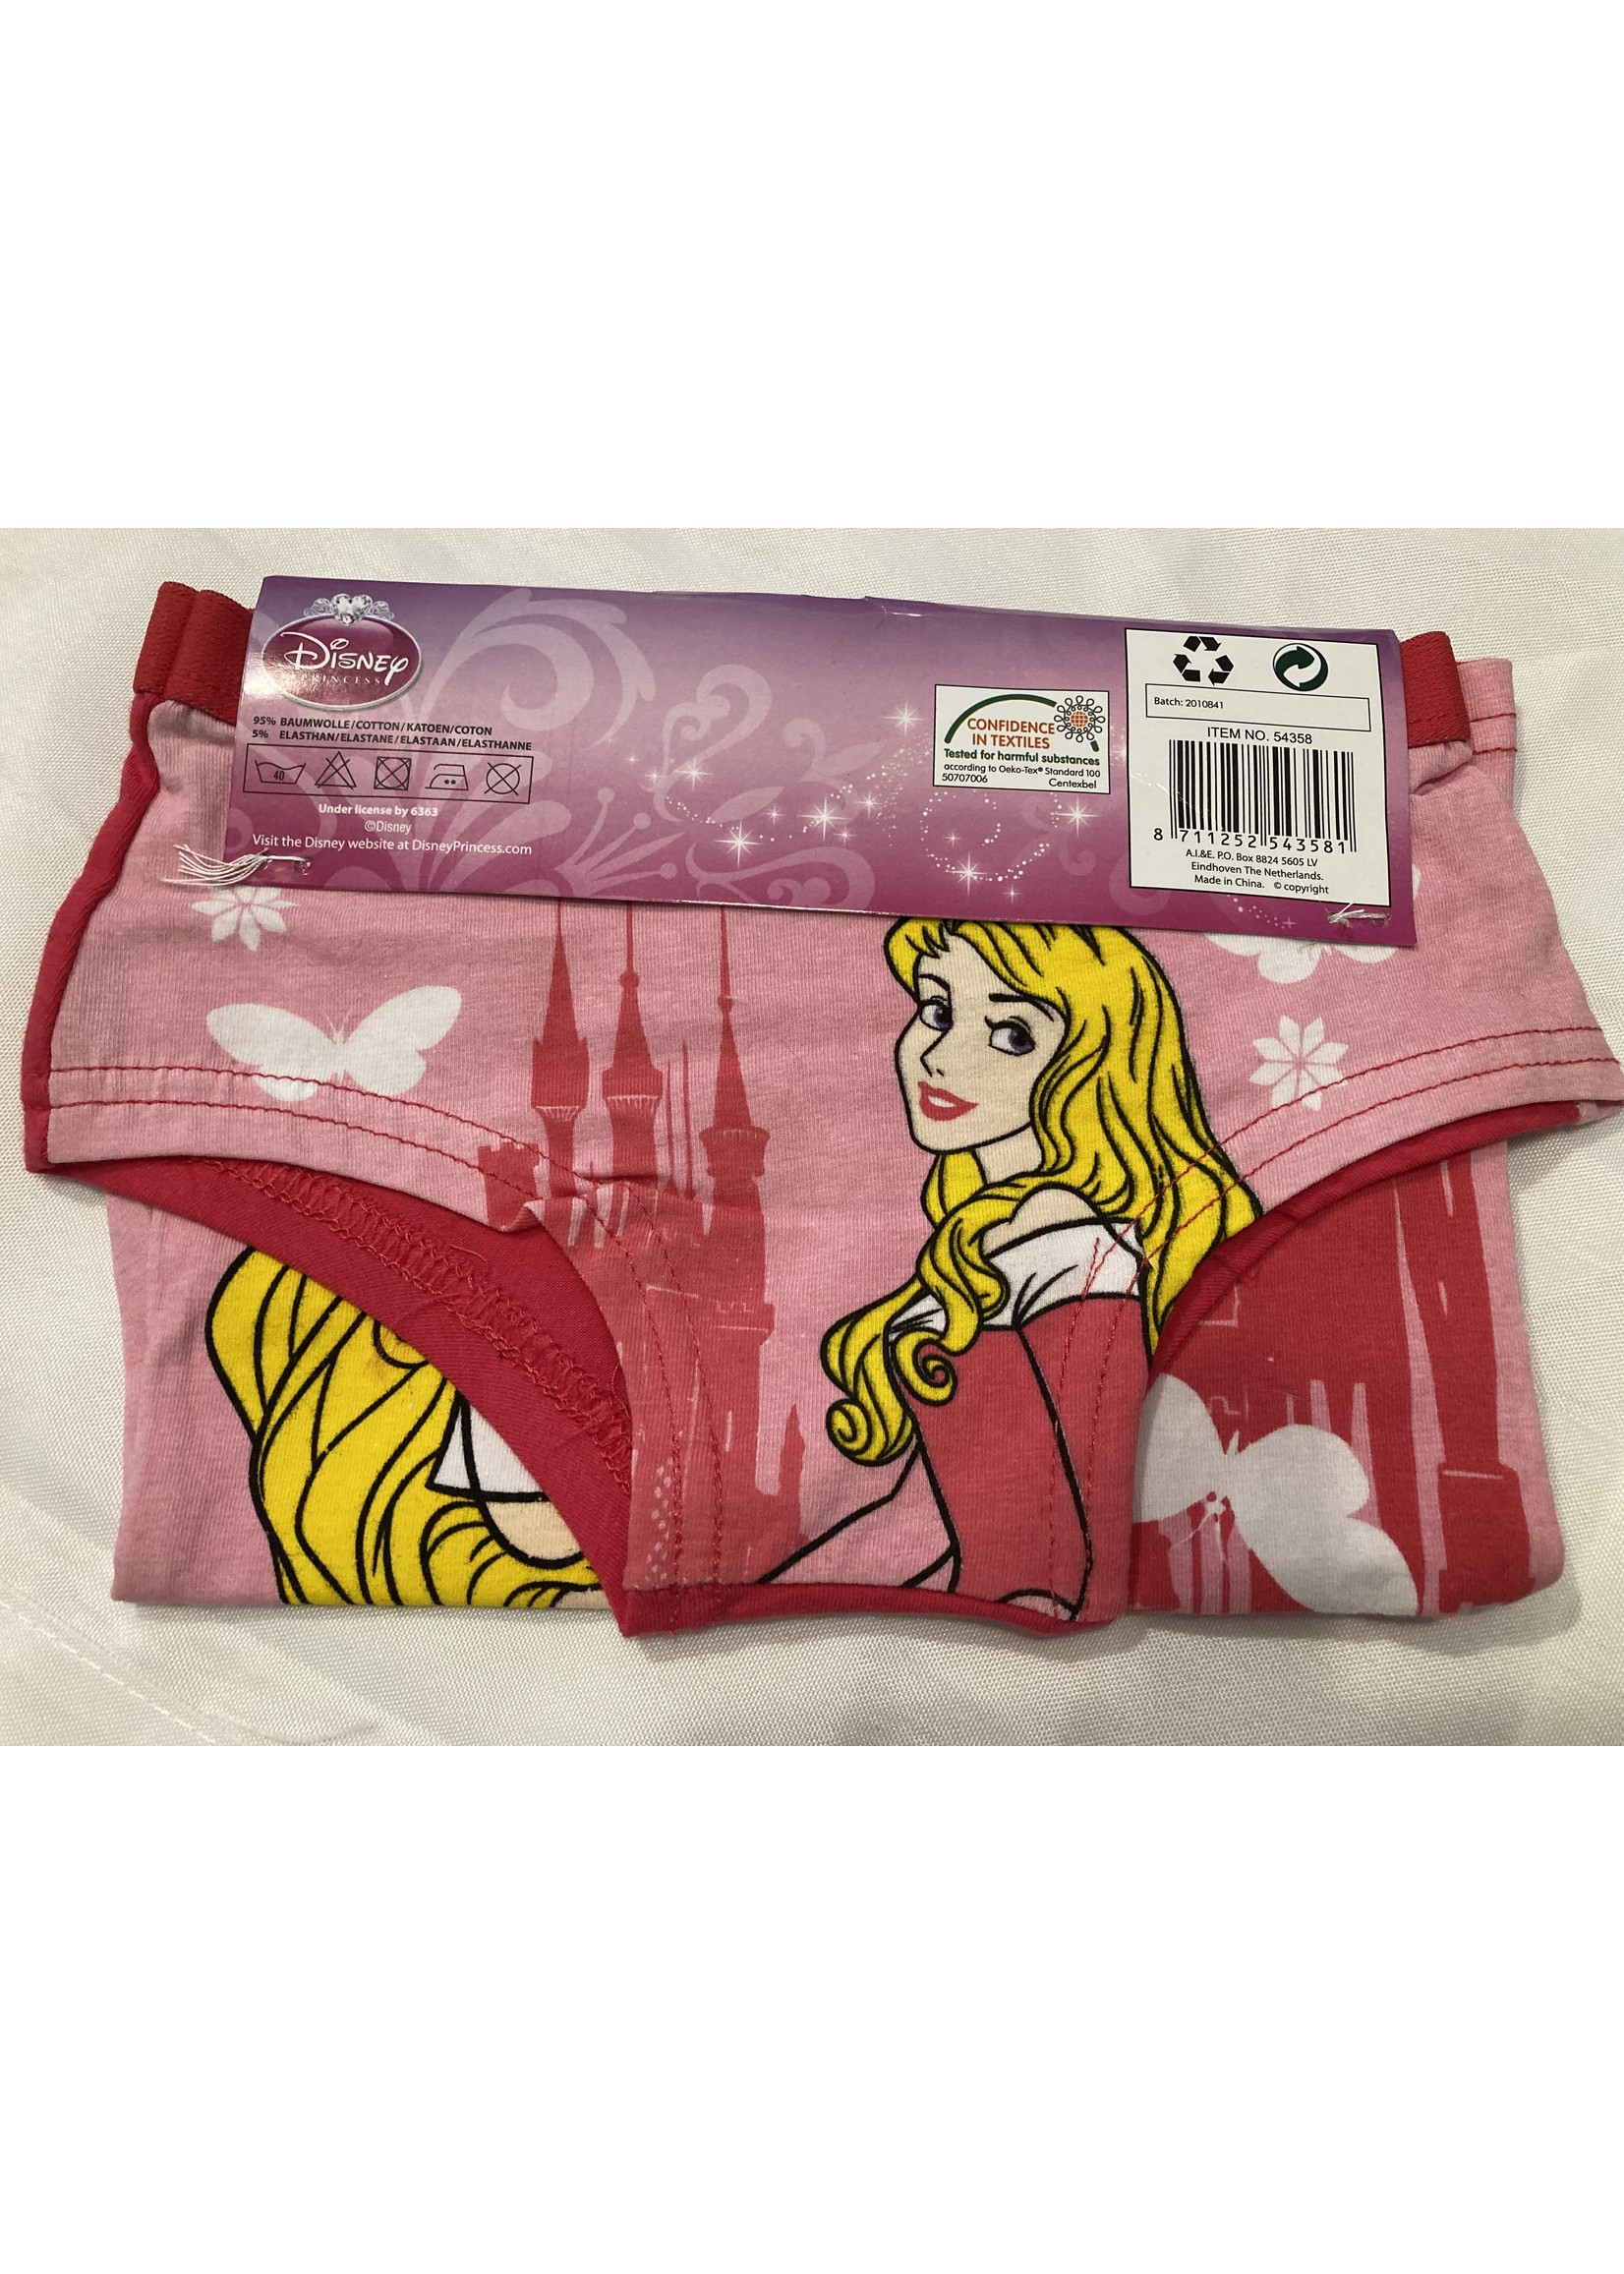 Disney Princess underwear from Disney red